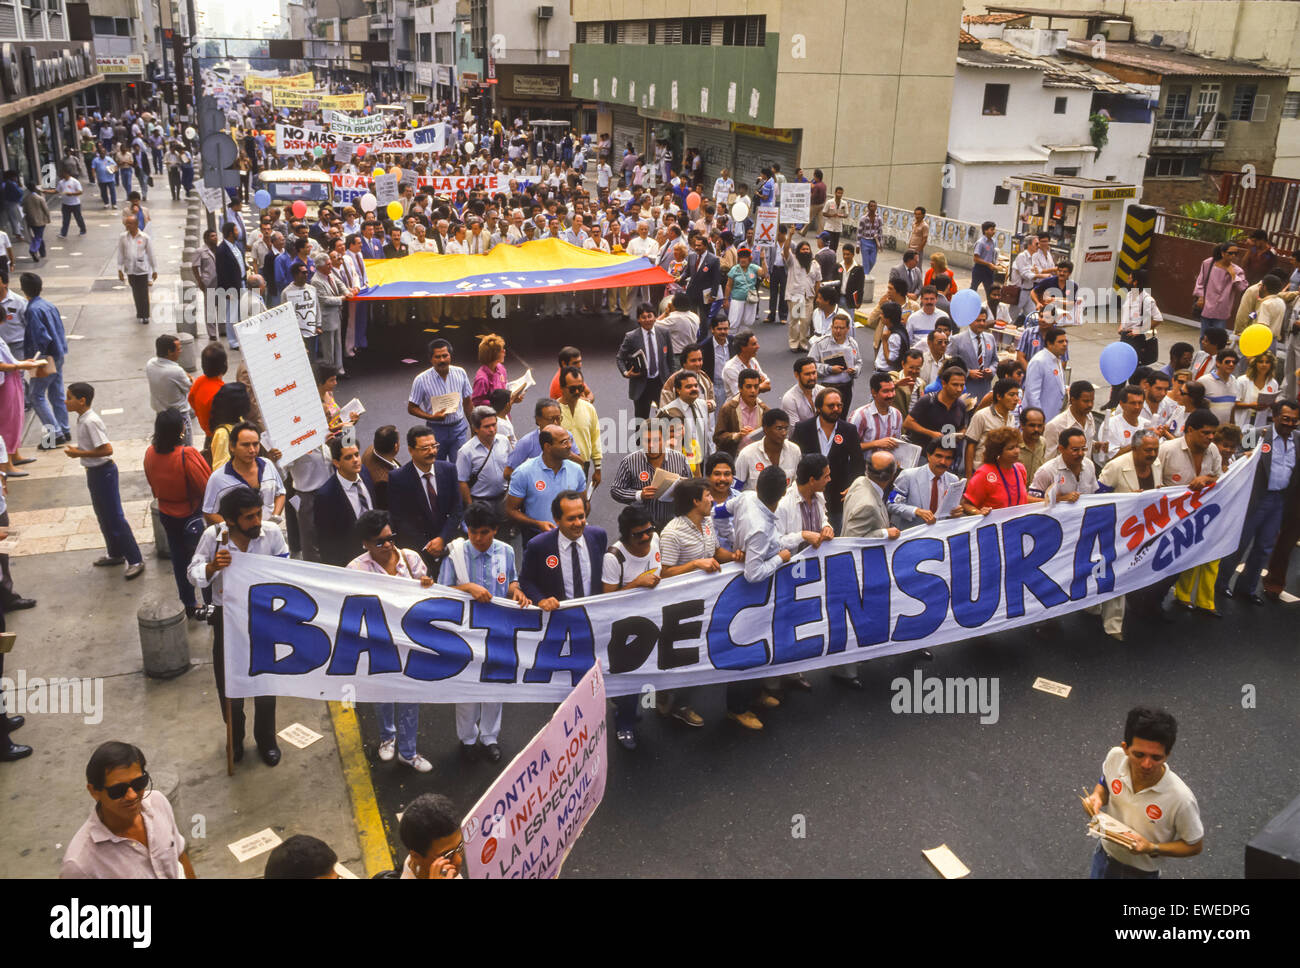 CARACAS, VENEZUELA - Freedom of press march demonstration against censorship. 1988 Stock Photo